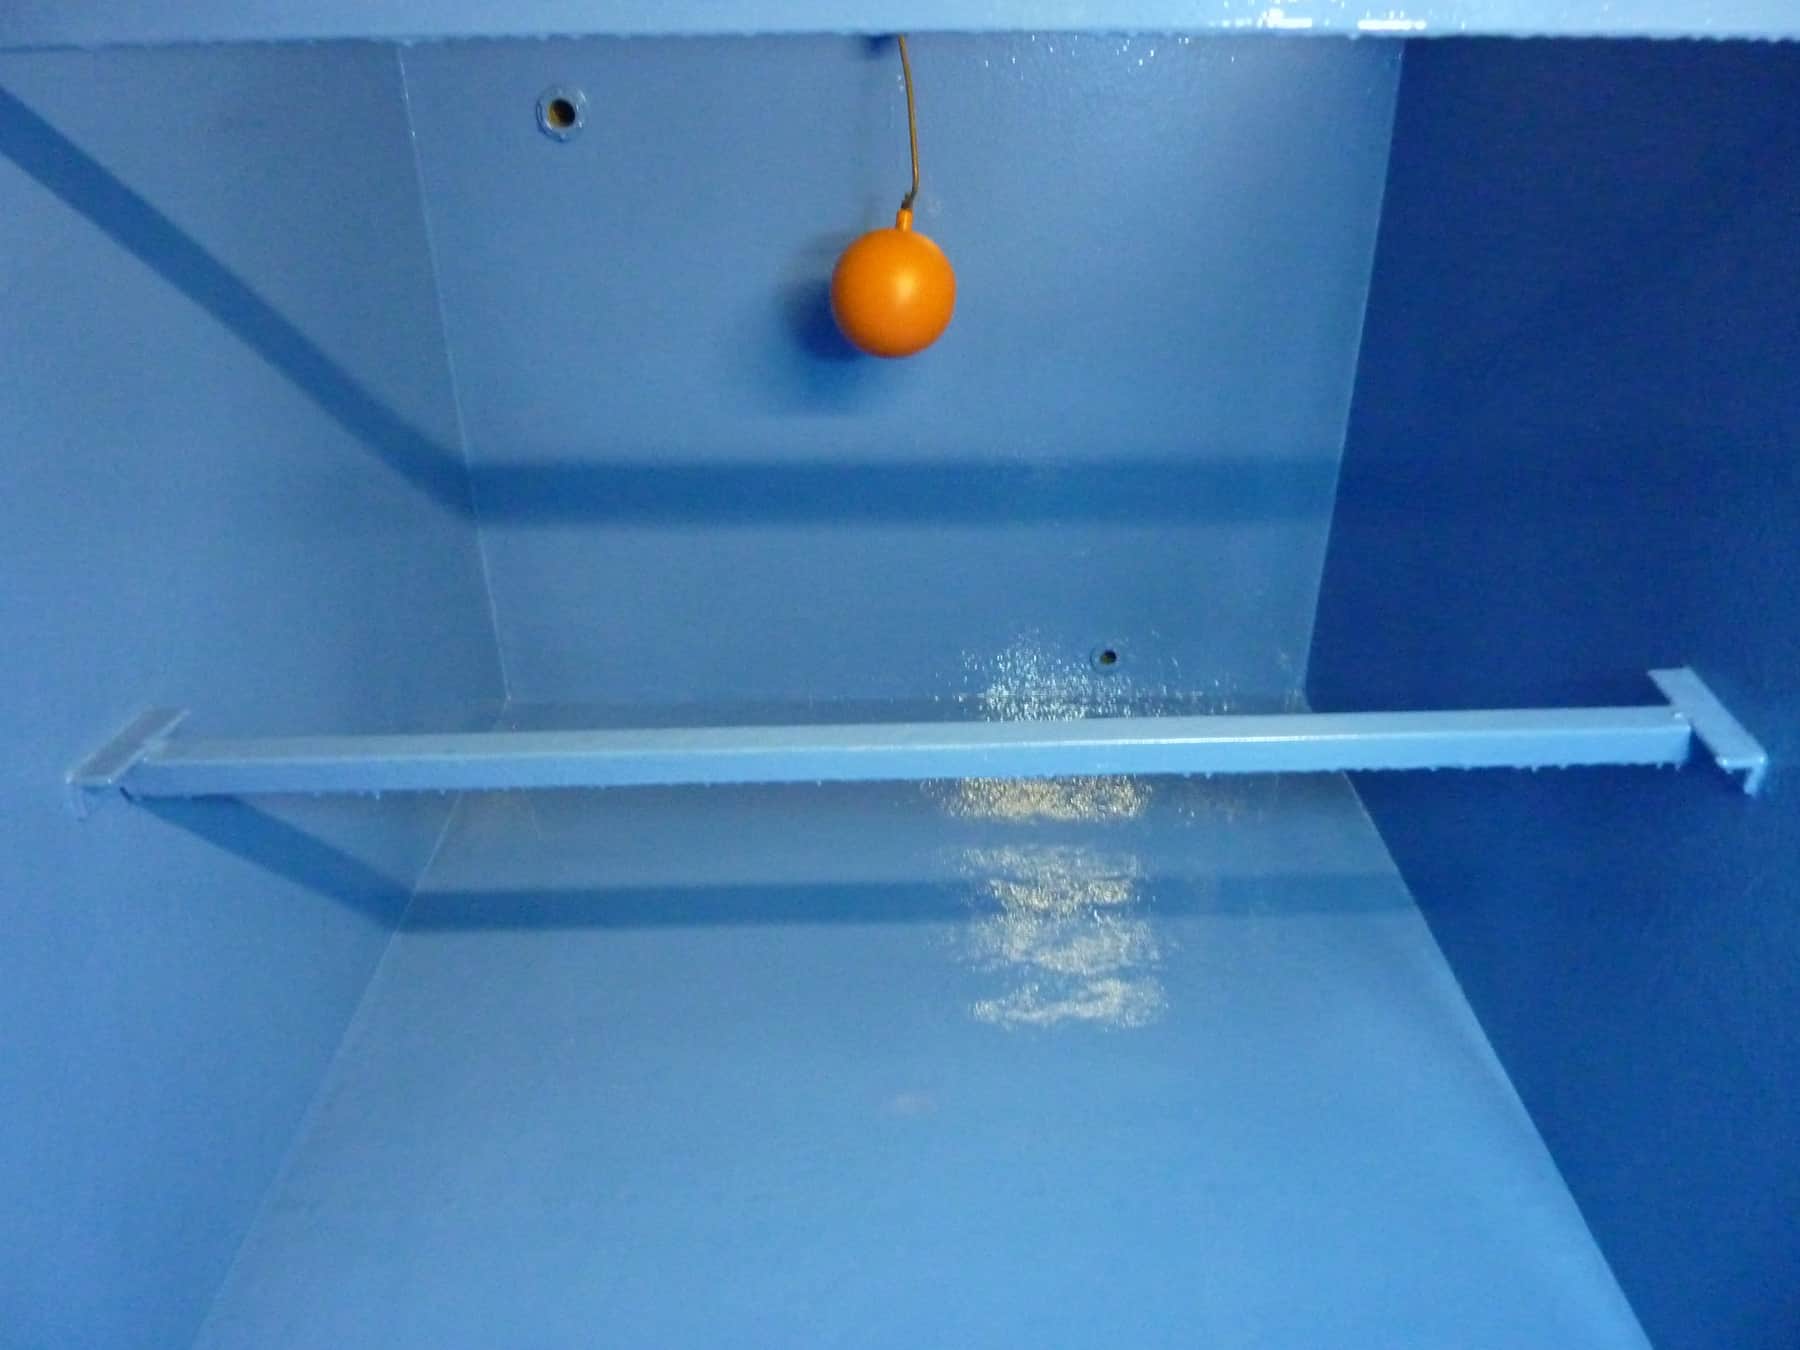 potable water tank internals painted in blue with orange ball gauge